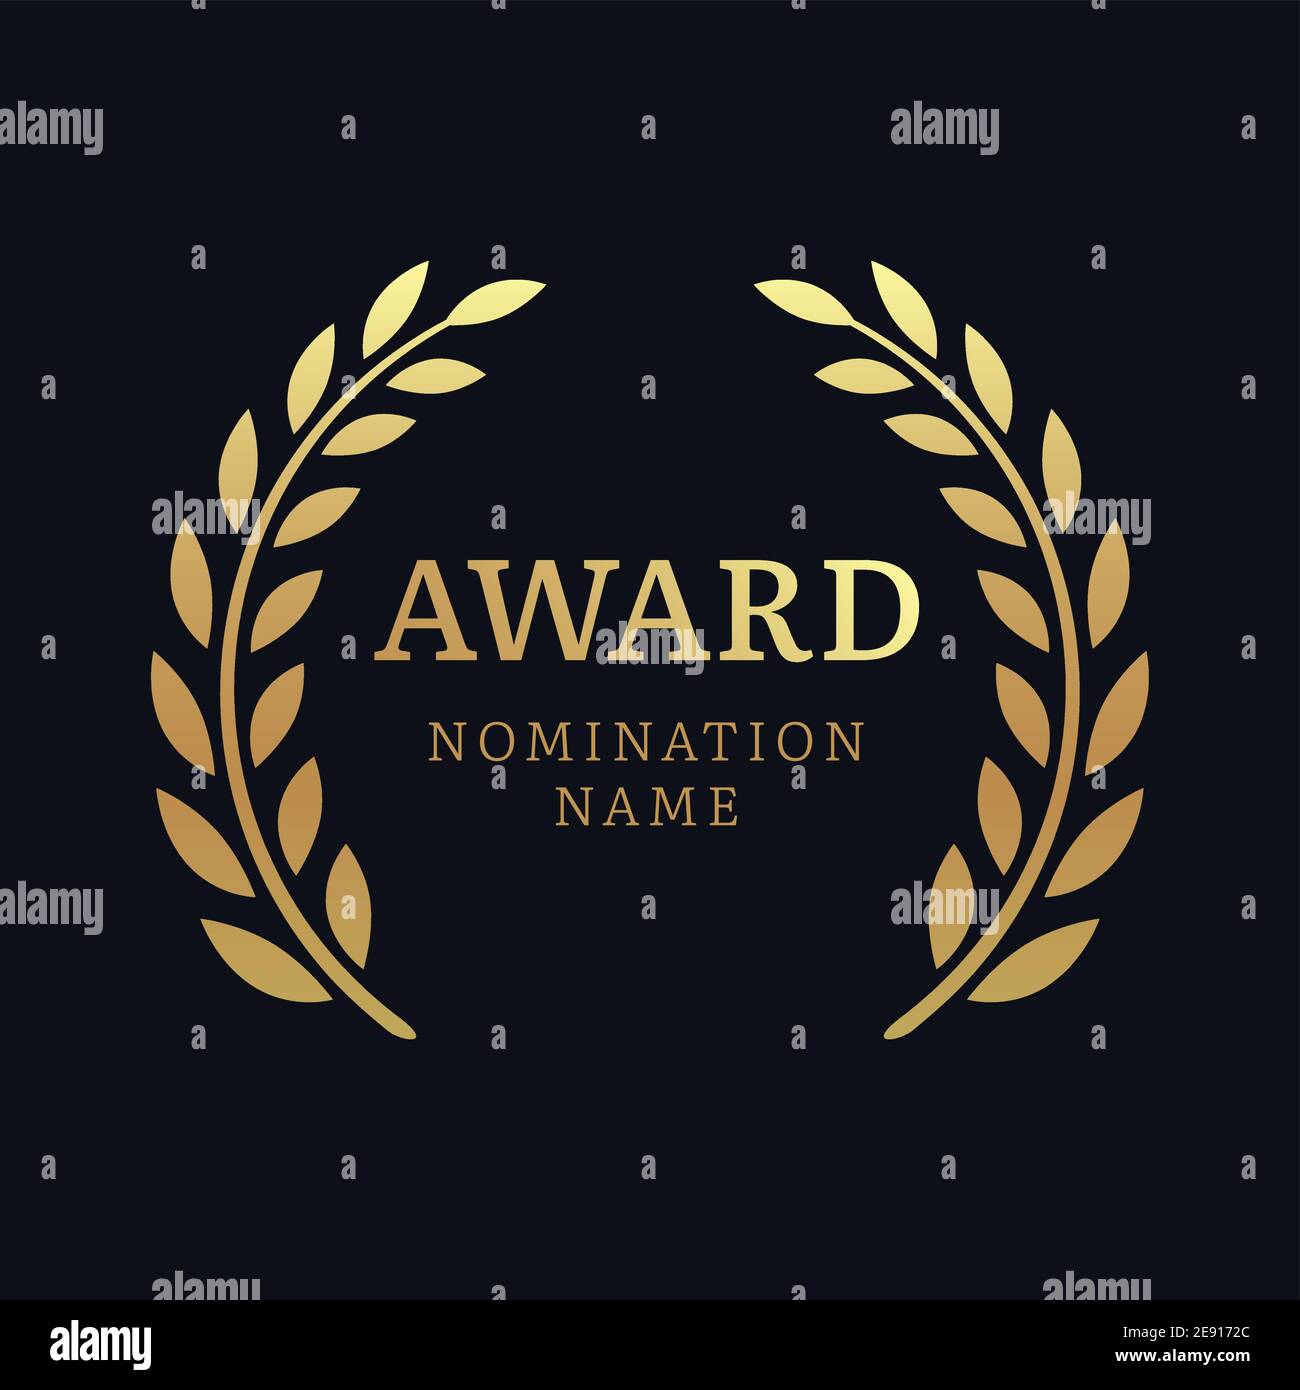 Award laurel vector logo poster. Gold win award icon design emblem nomination Stock Vector